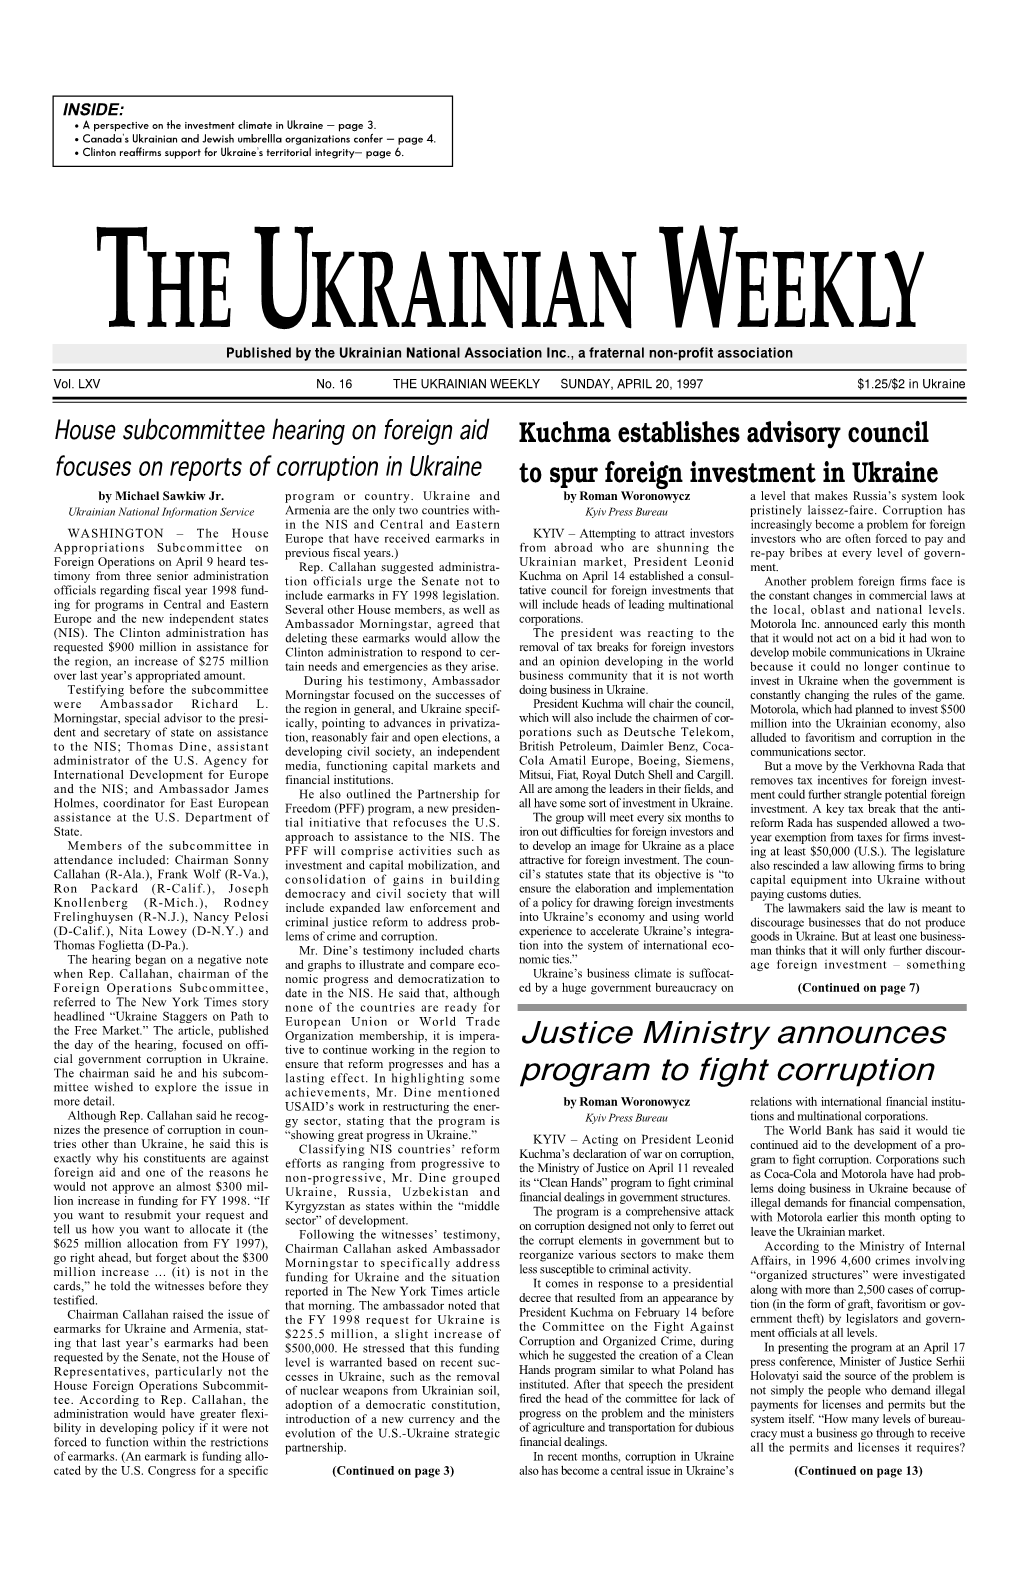 The Ukrainian Weekly 1997, No.16